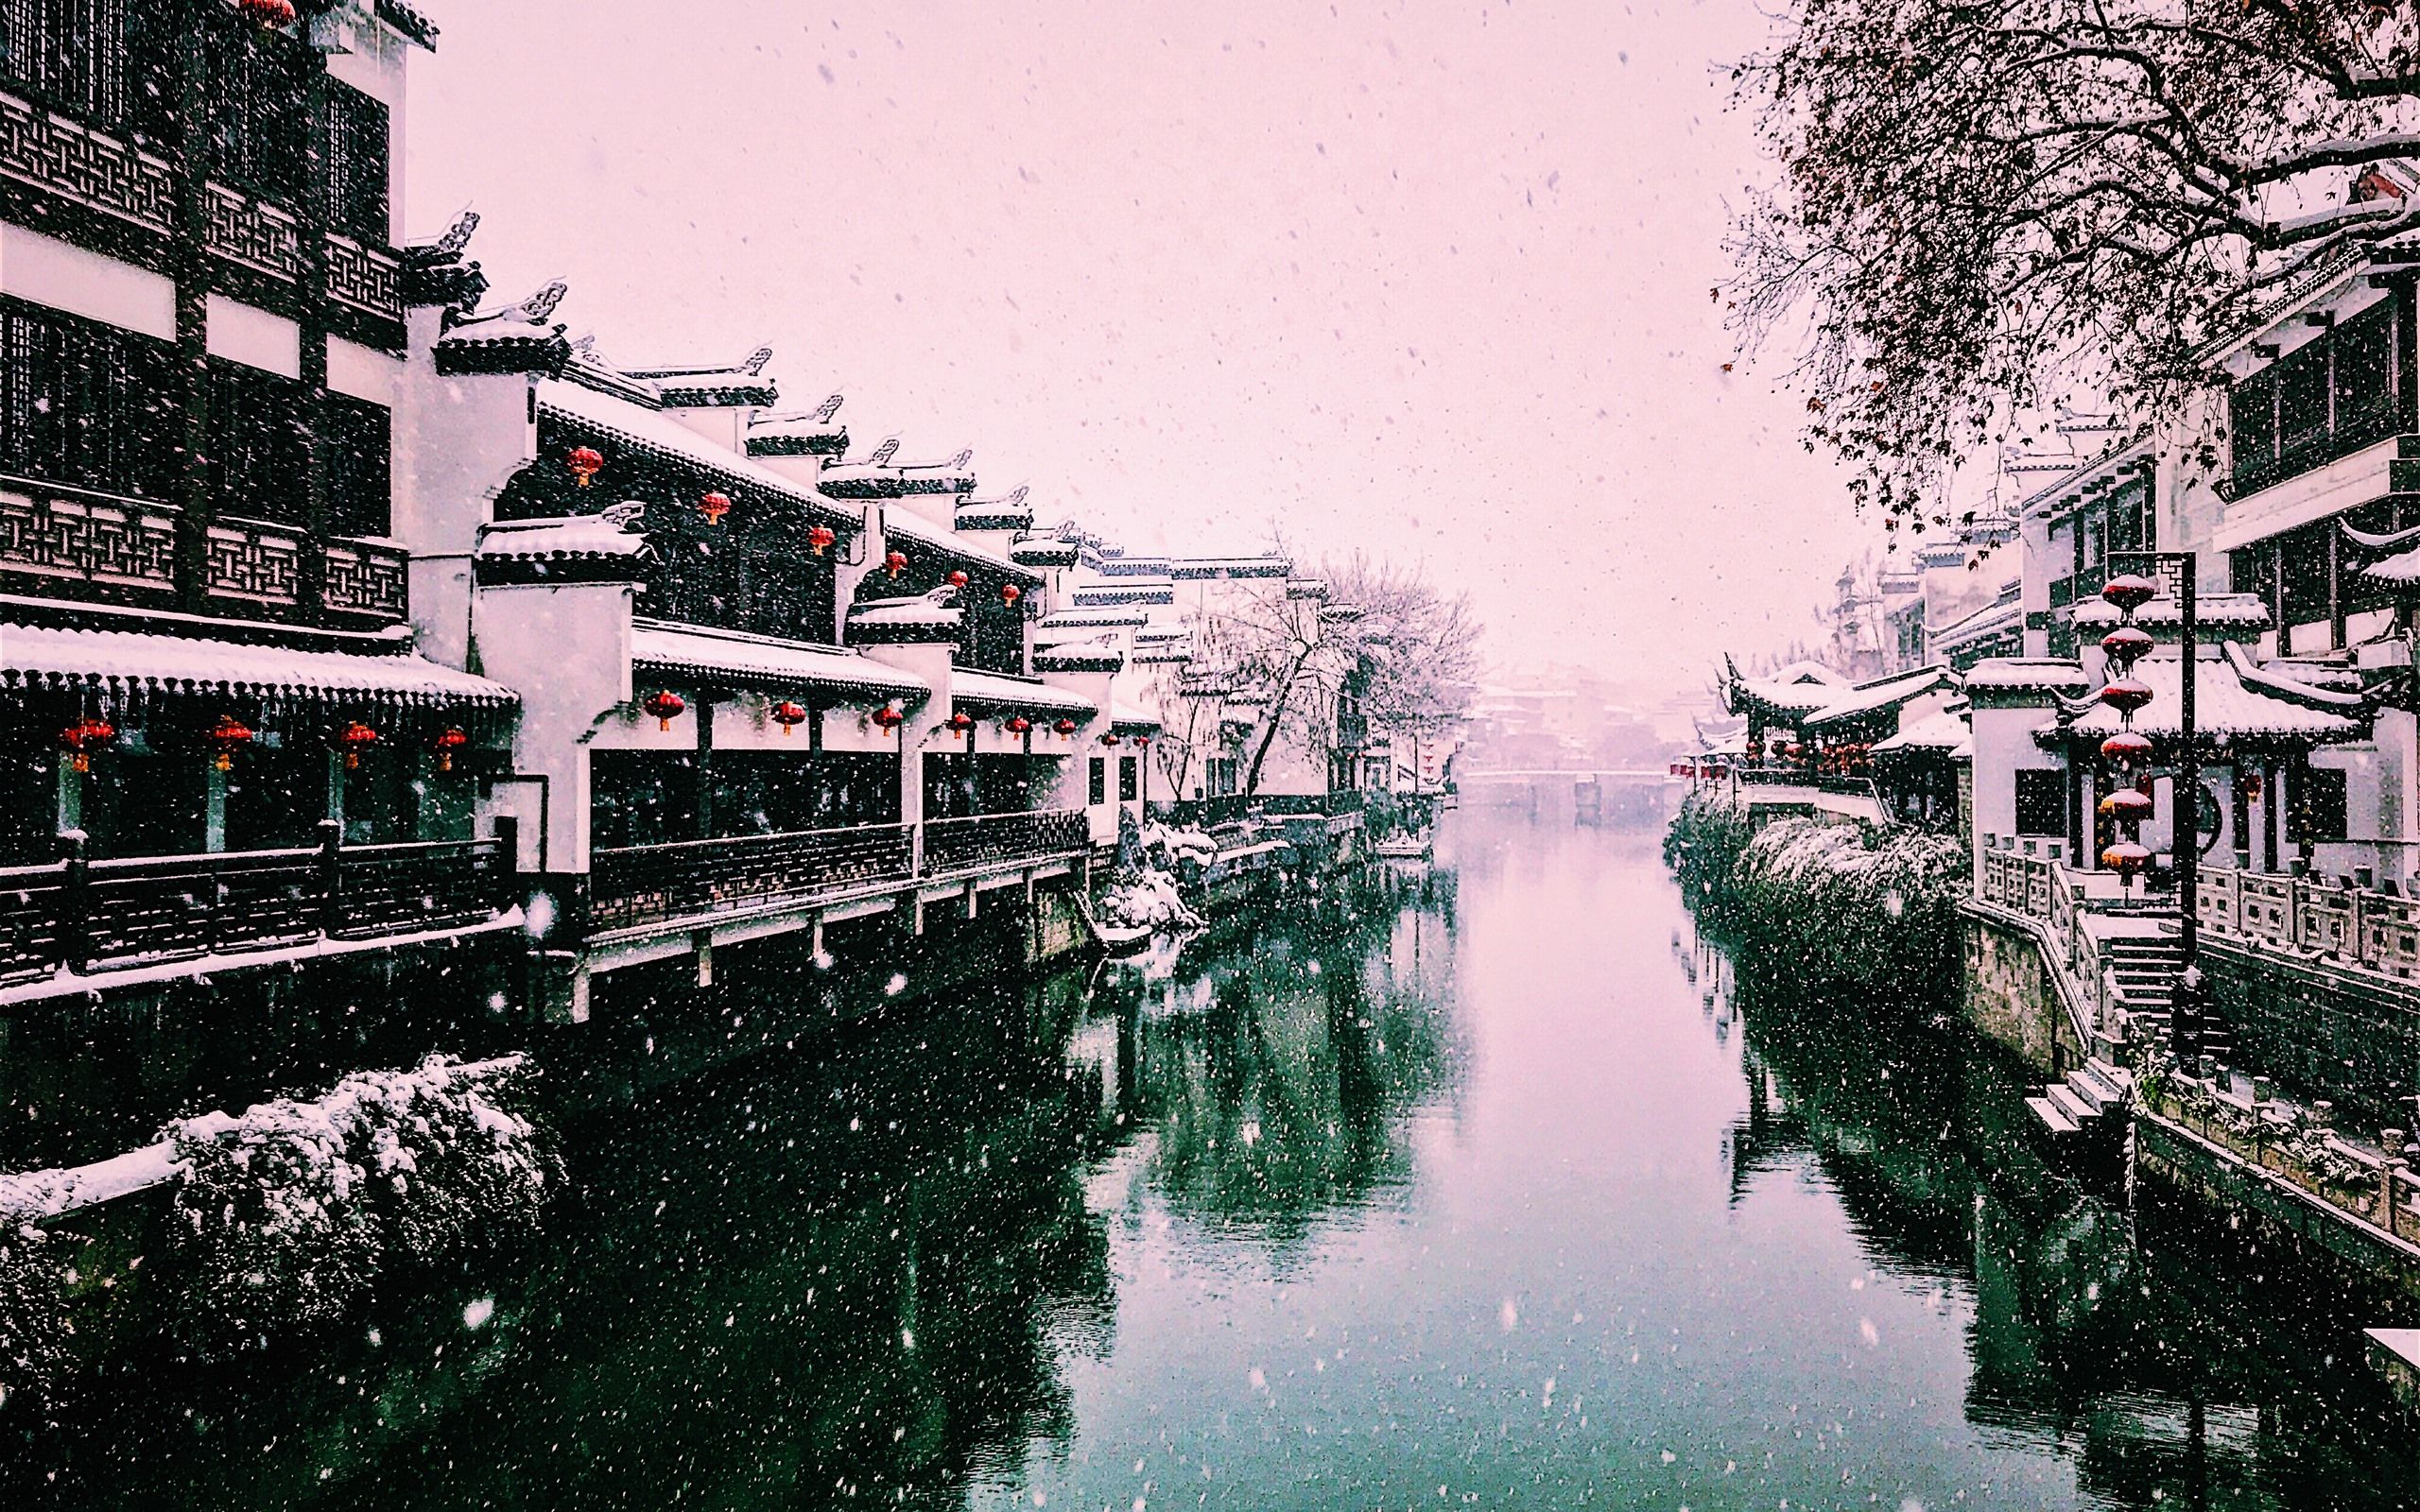 Wallpaper Beautiful winter, snowy, river, houses, lantern, Nanjing, China 3840x2160 UHD 4K Picture, Image